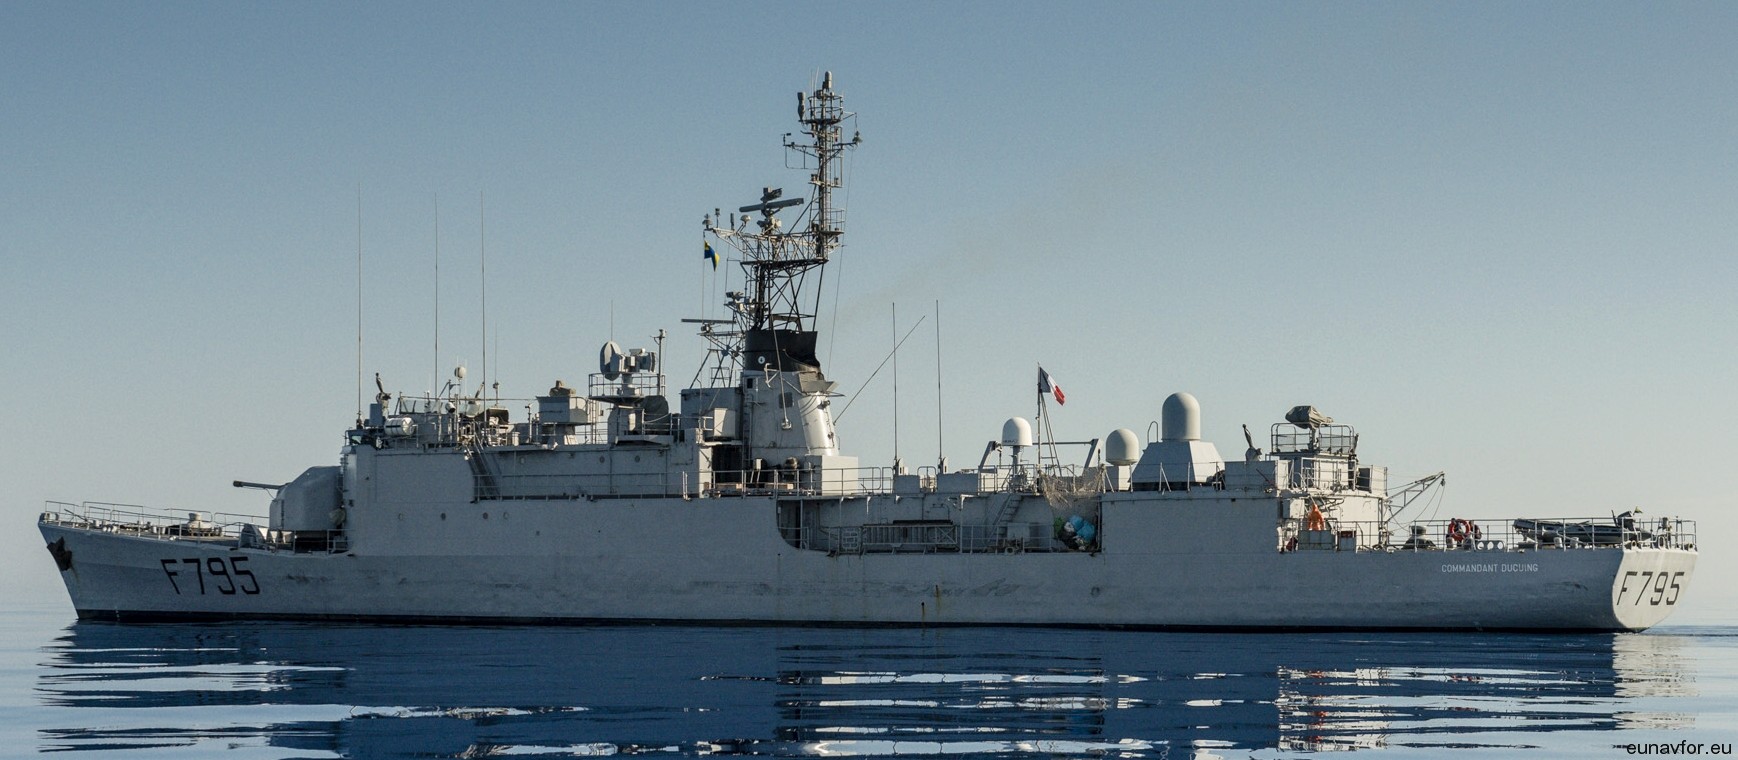 f-795 fs commandant ducuing d'estienne d'orves class corvette type a69 aviso french navy marine nationale 03 eunavfor